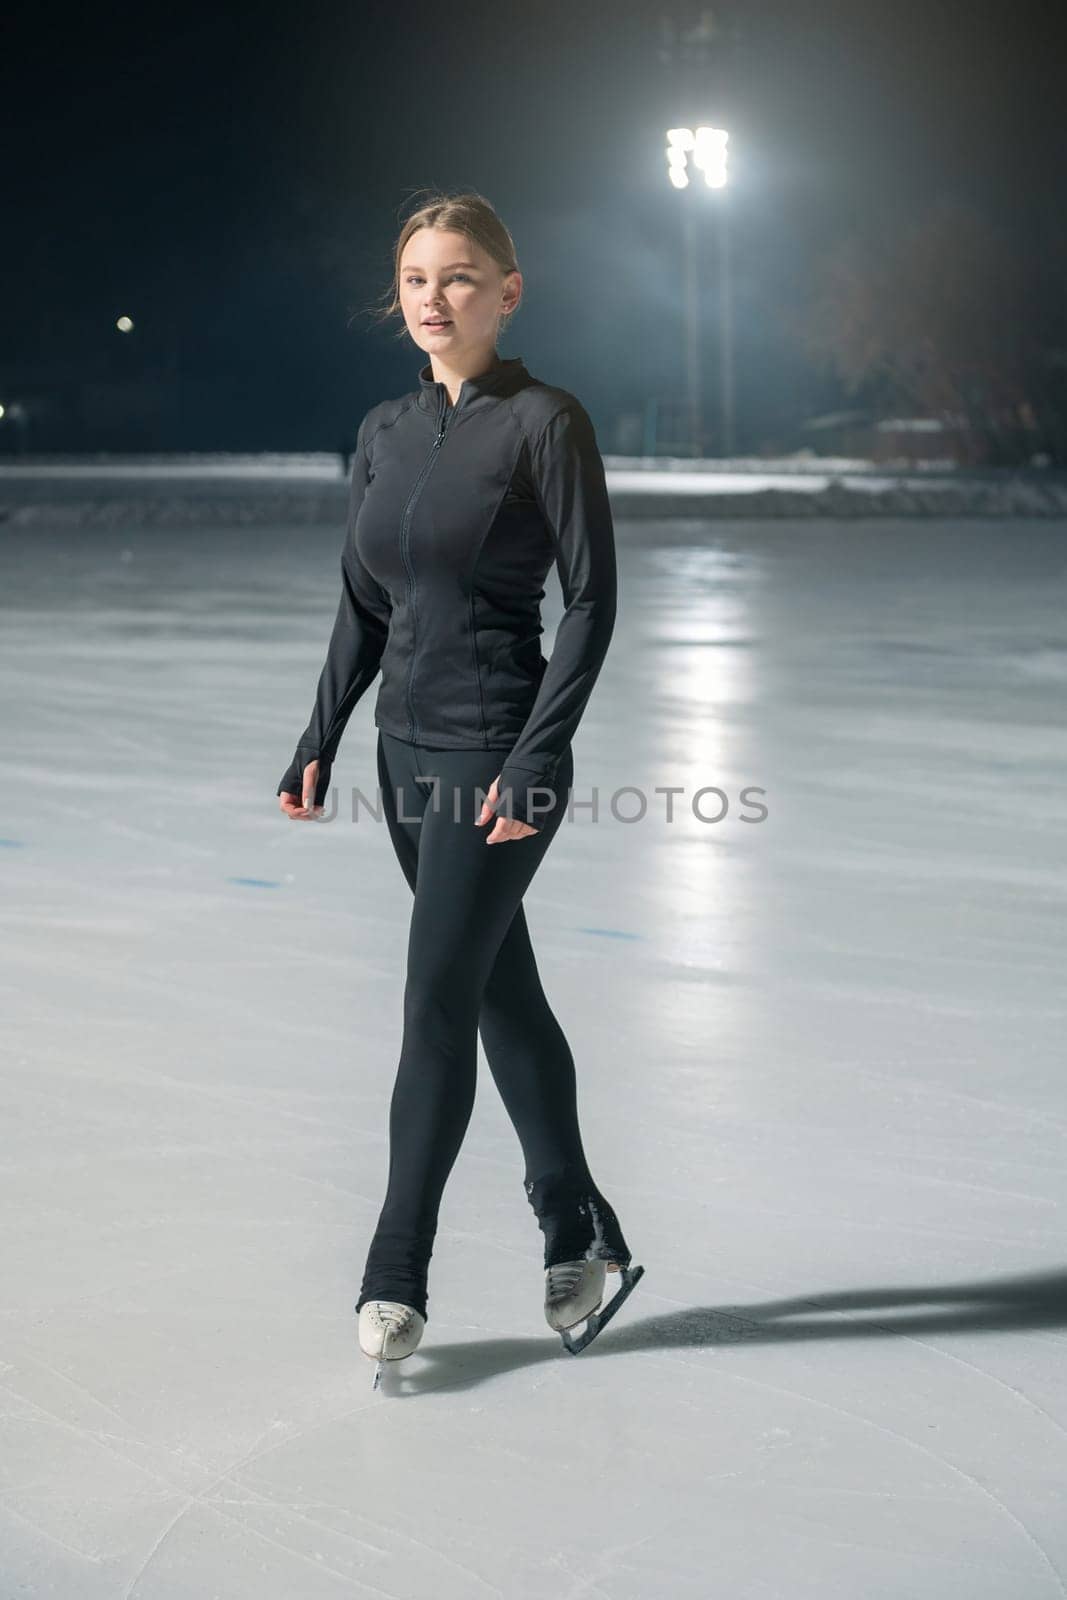 Beautiful young woman ice skating by rusak